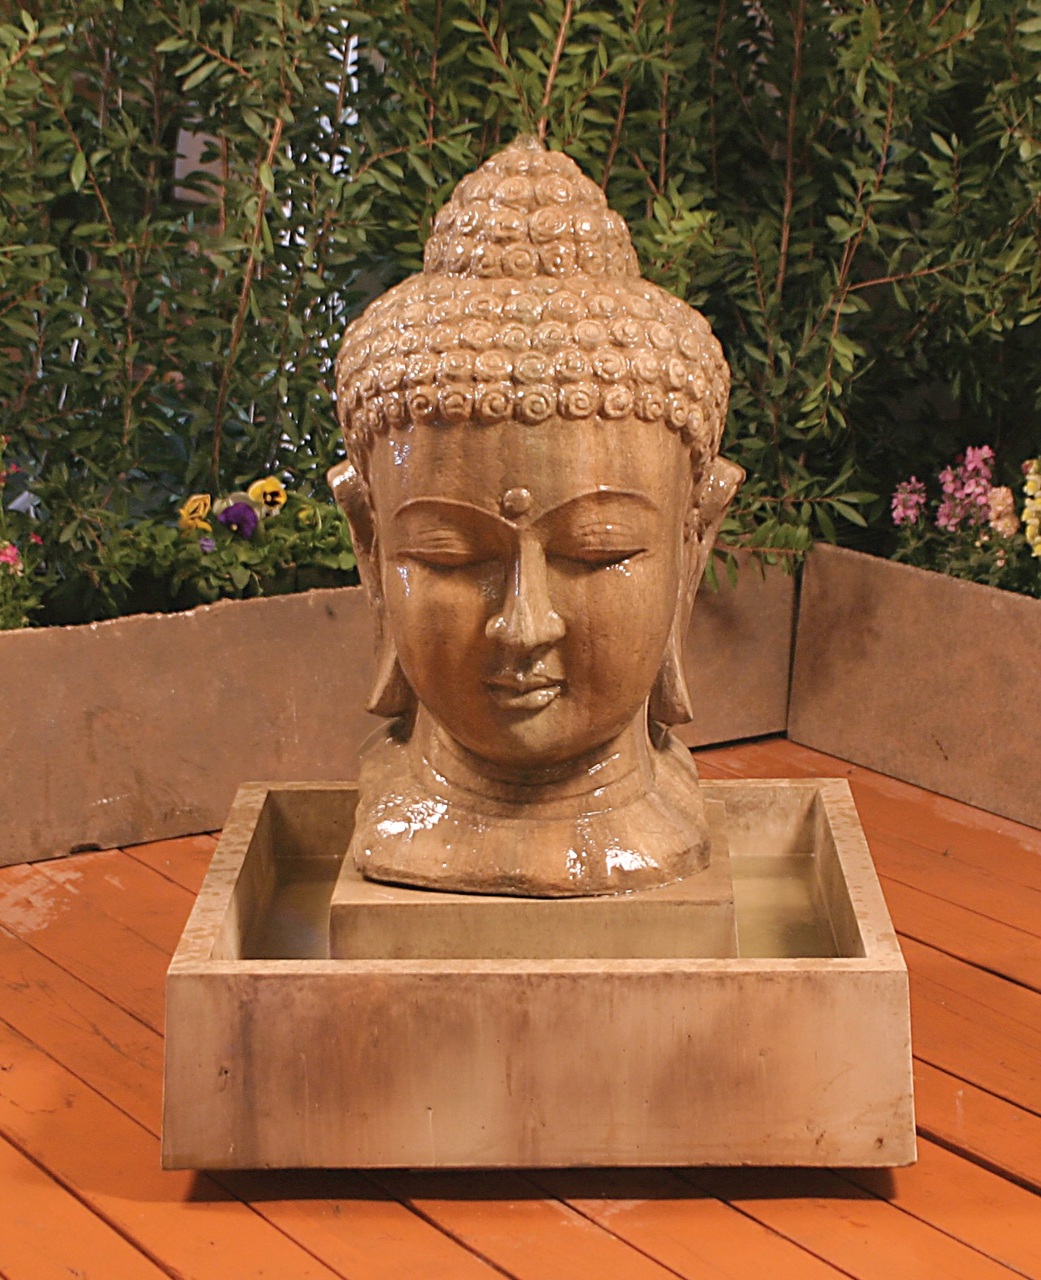 Buddha Head Fountain - Small meditative garden fountain